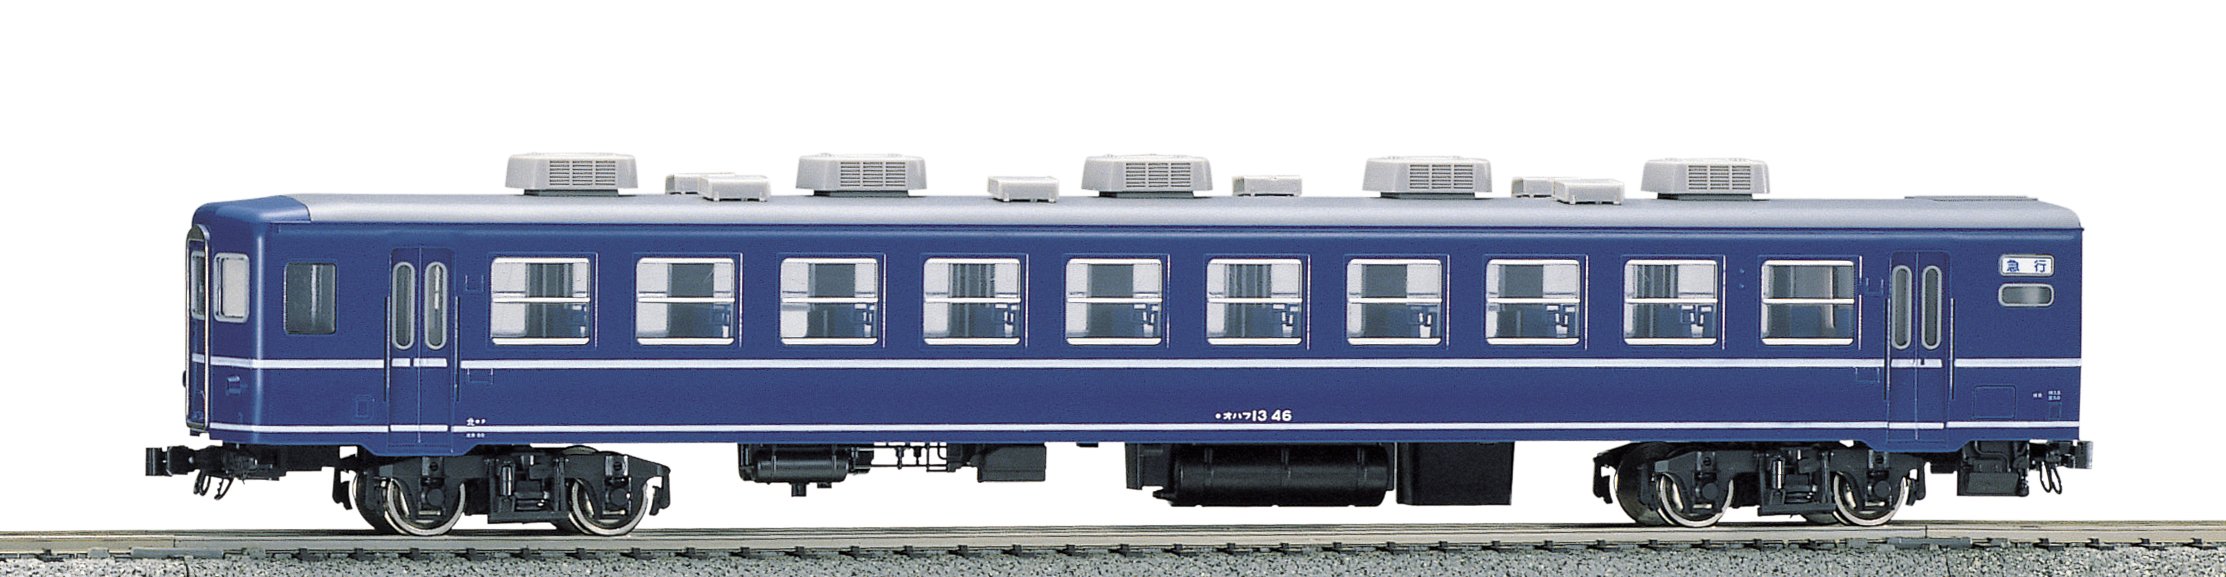 Kato Ho Gauge Ohafu 13 1-503 Model Premium Railway Passenger Car